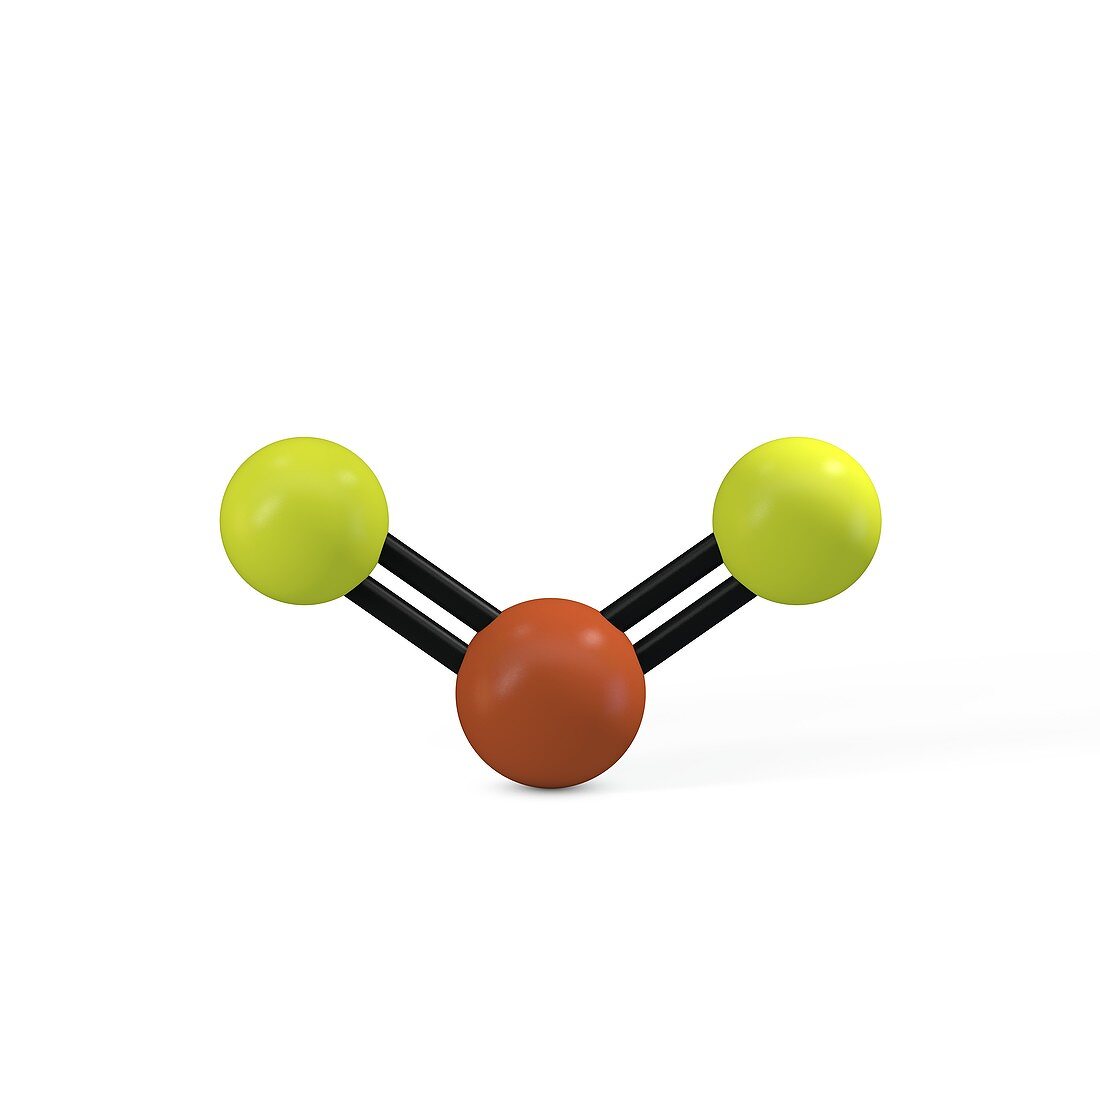 Pyrite molecule, illustration